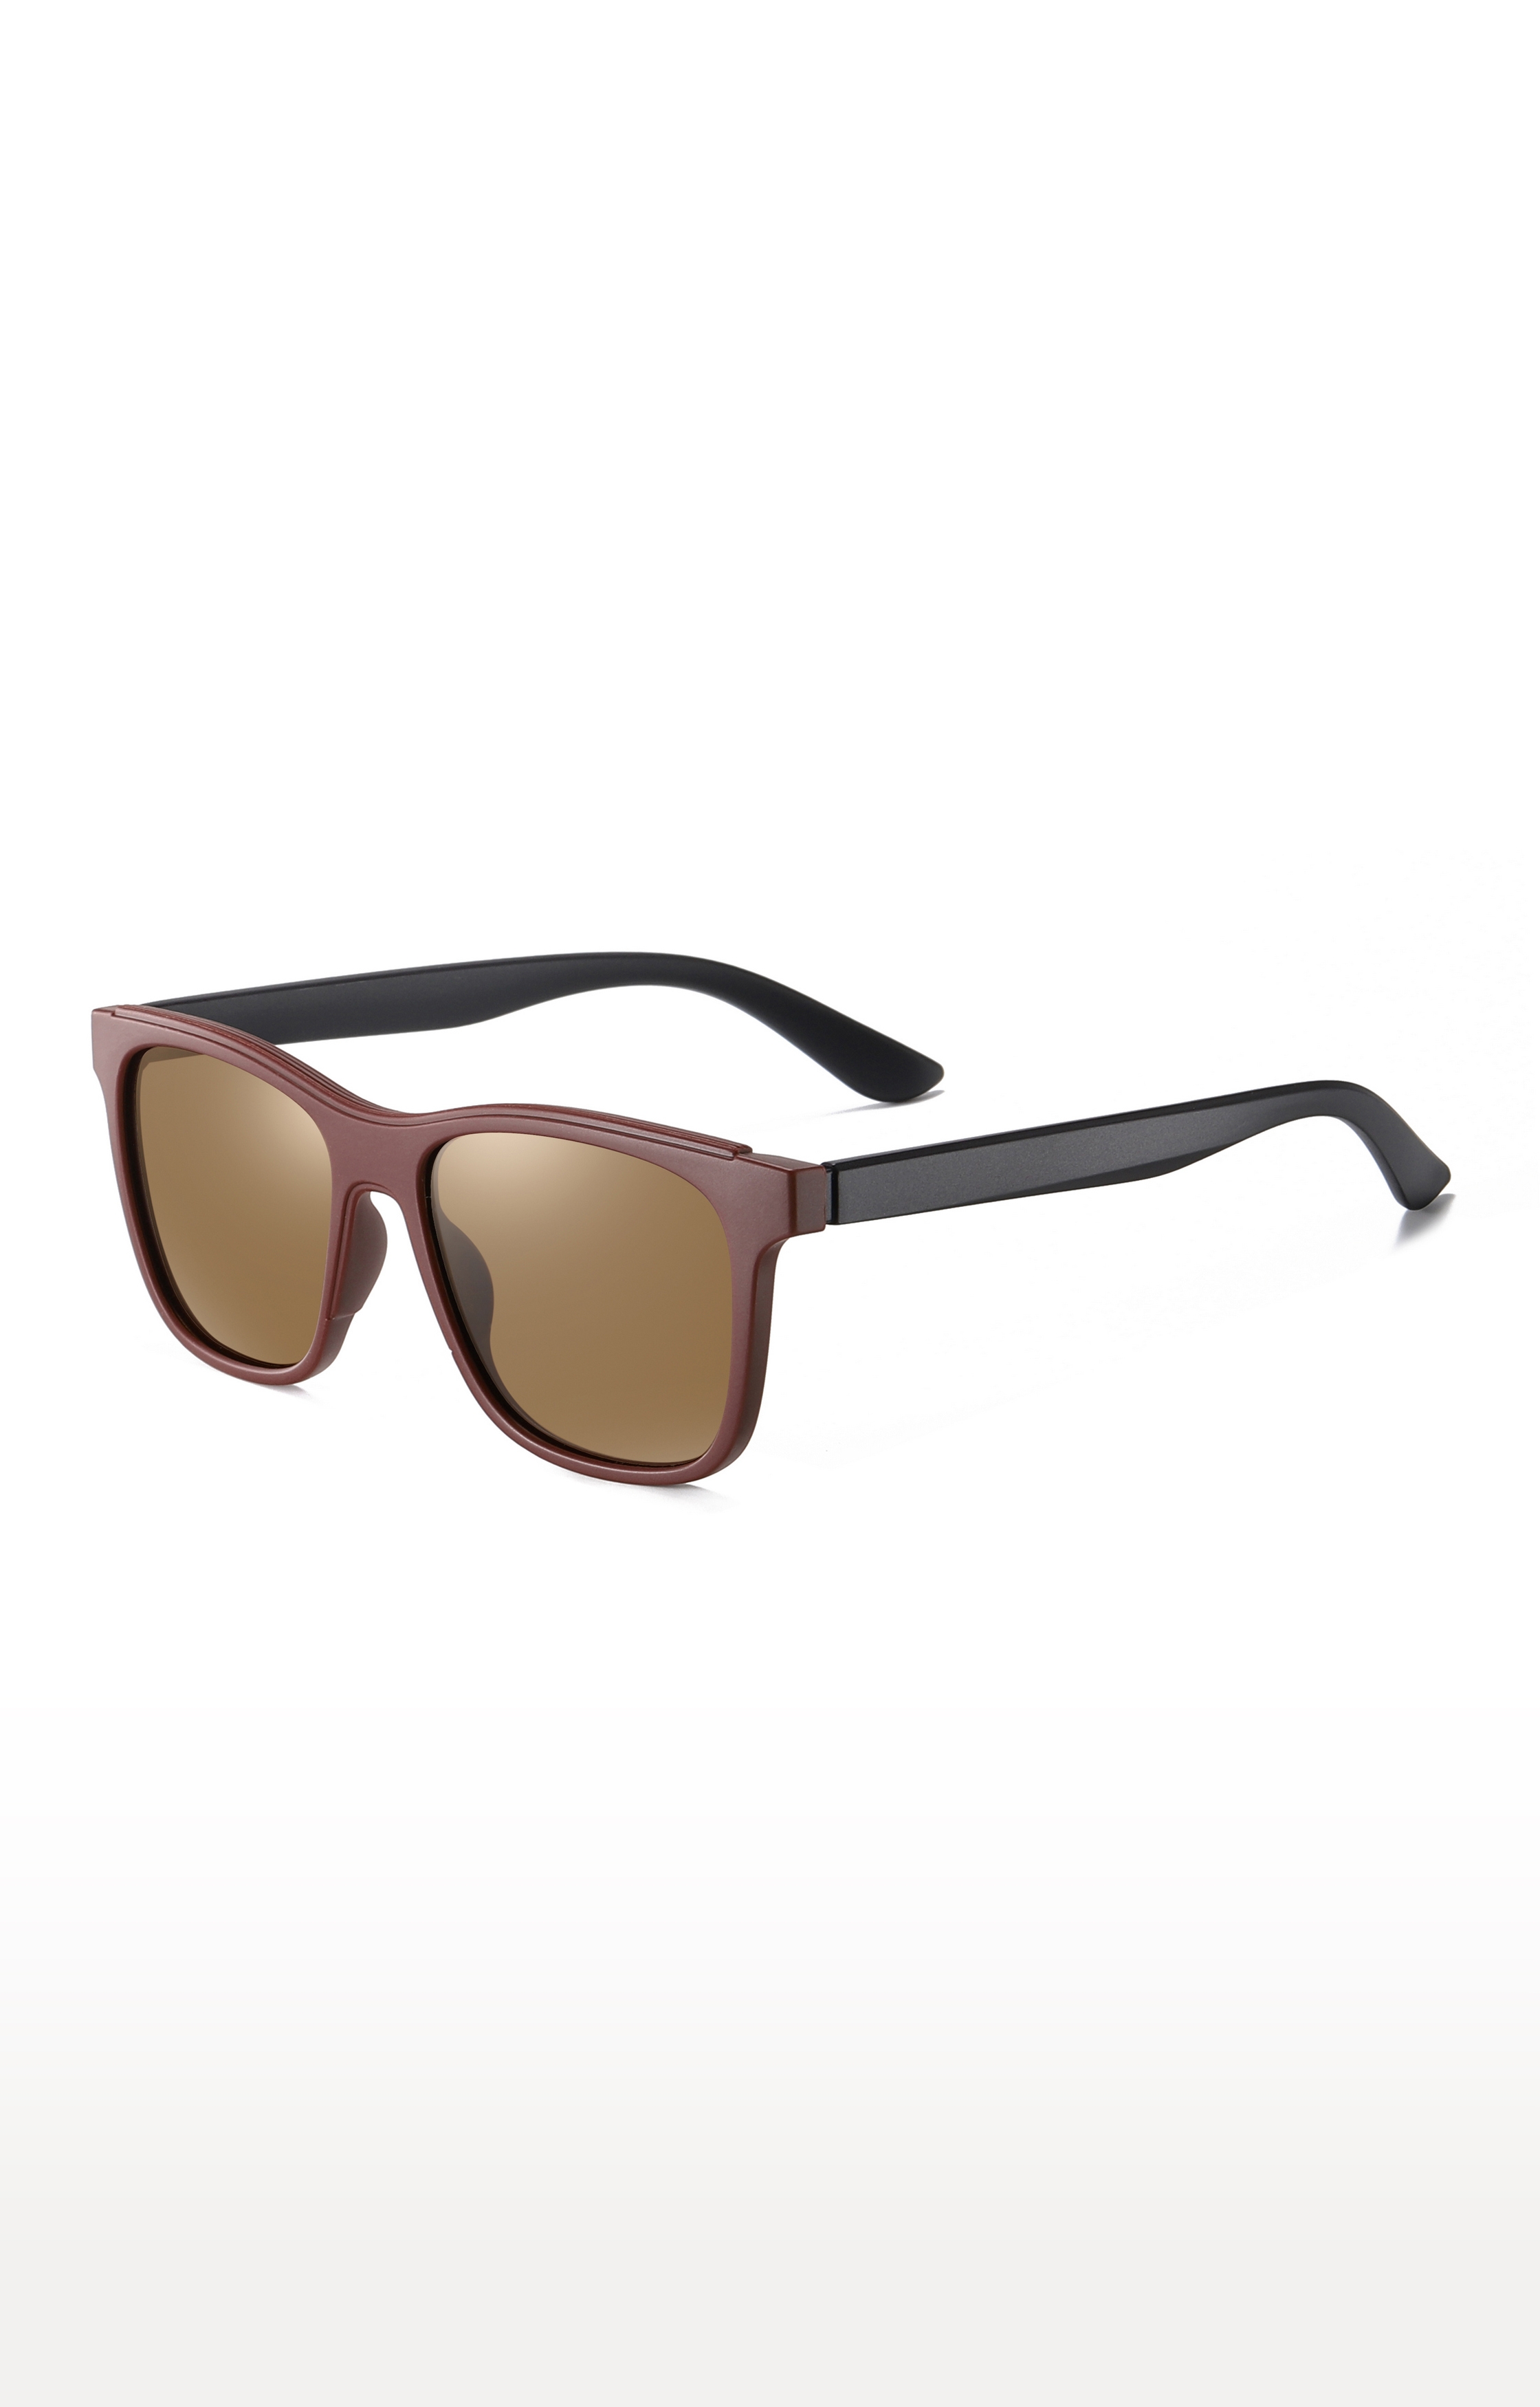 Aeropostale | Aeropostale Wayfarer Sunglasses TR90 Frame with TAC Polarized Lenses